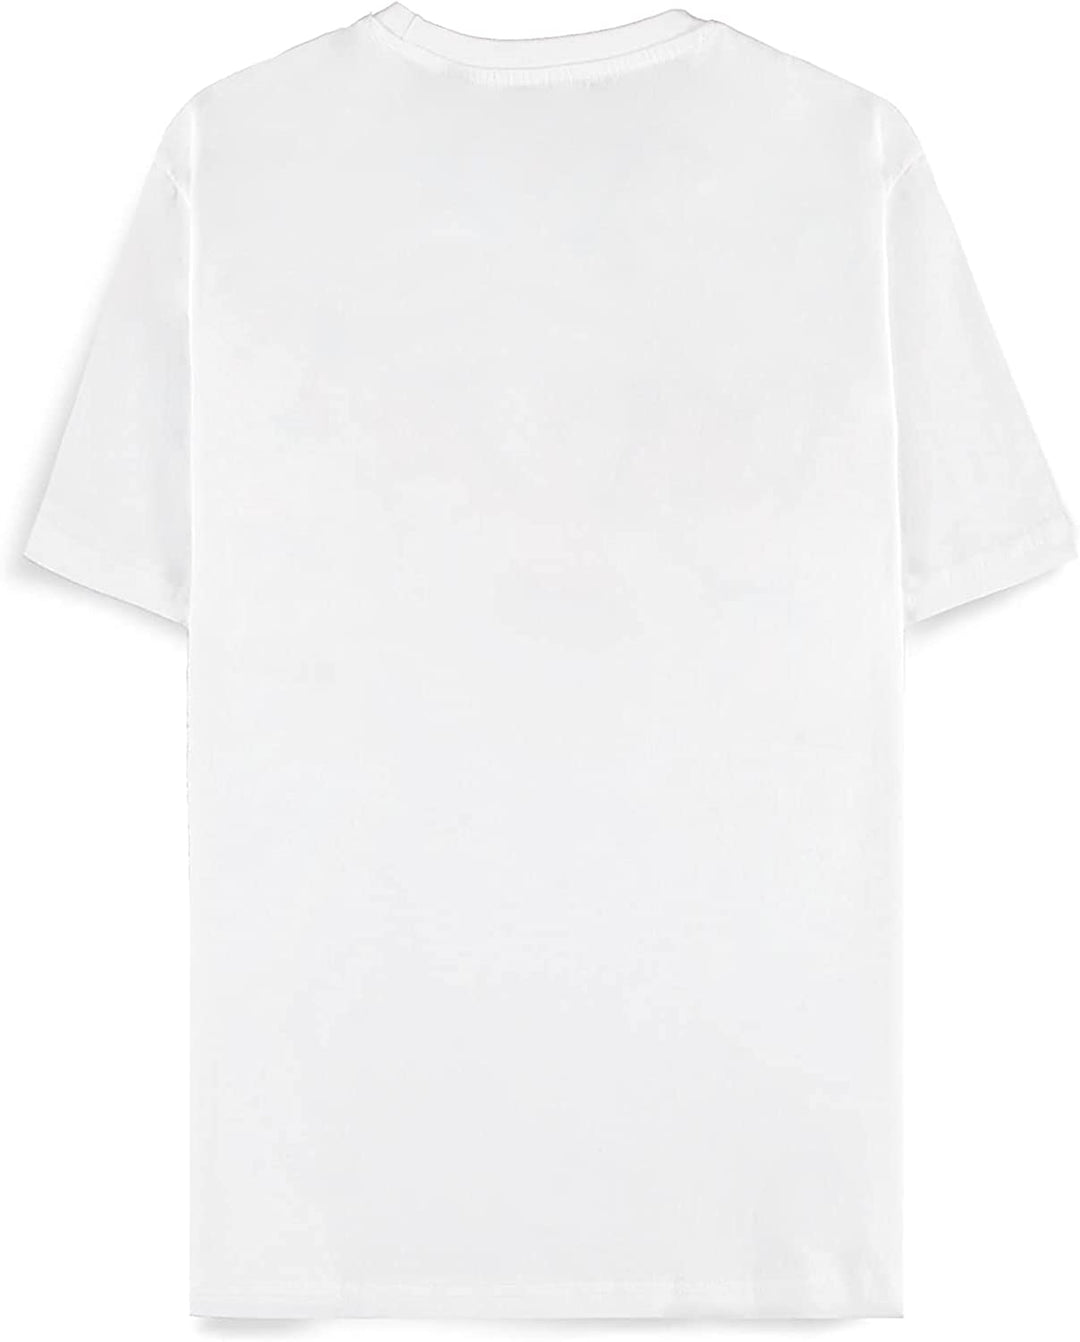 POKEMON - Dracaufeu #006 - T-Shirt Homme (L)